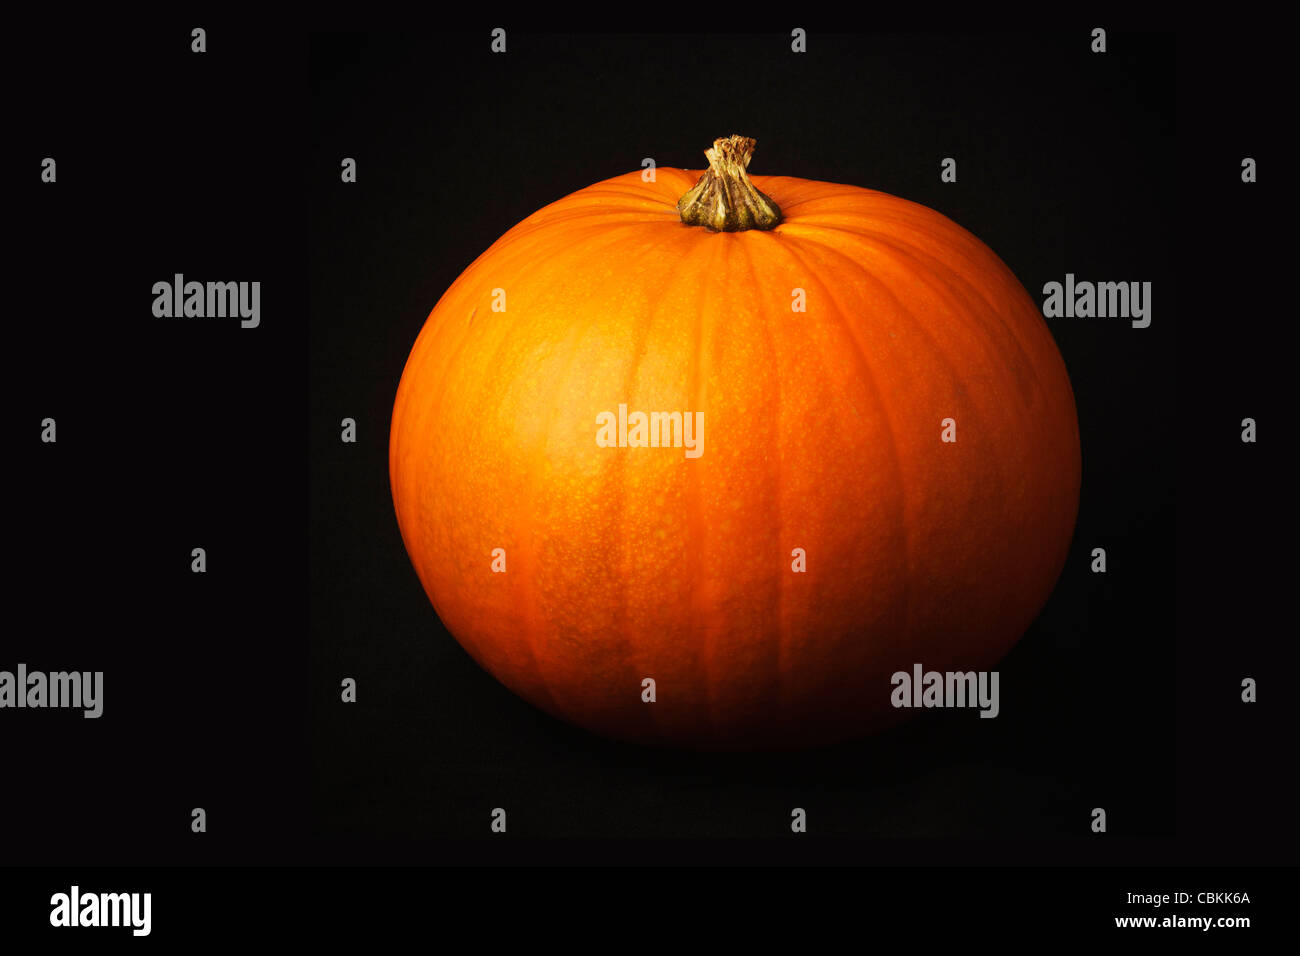 A pumpkin against a black background Stock Photo